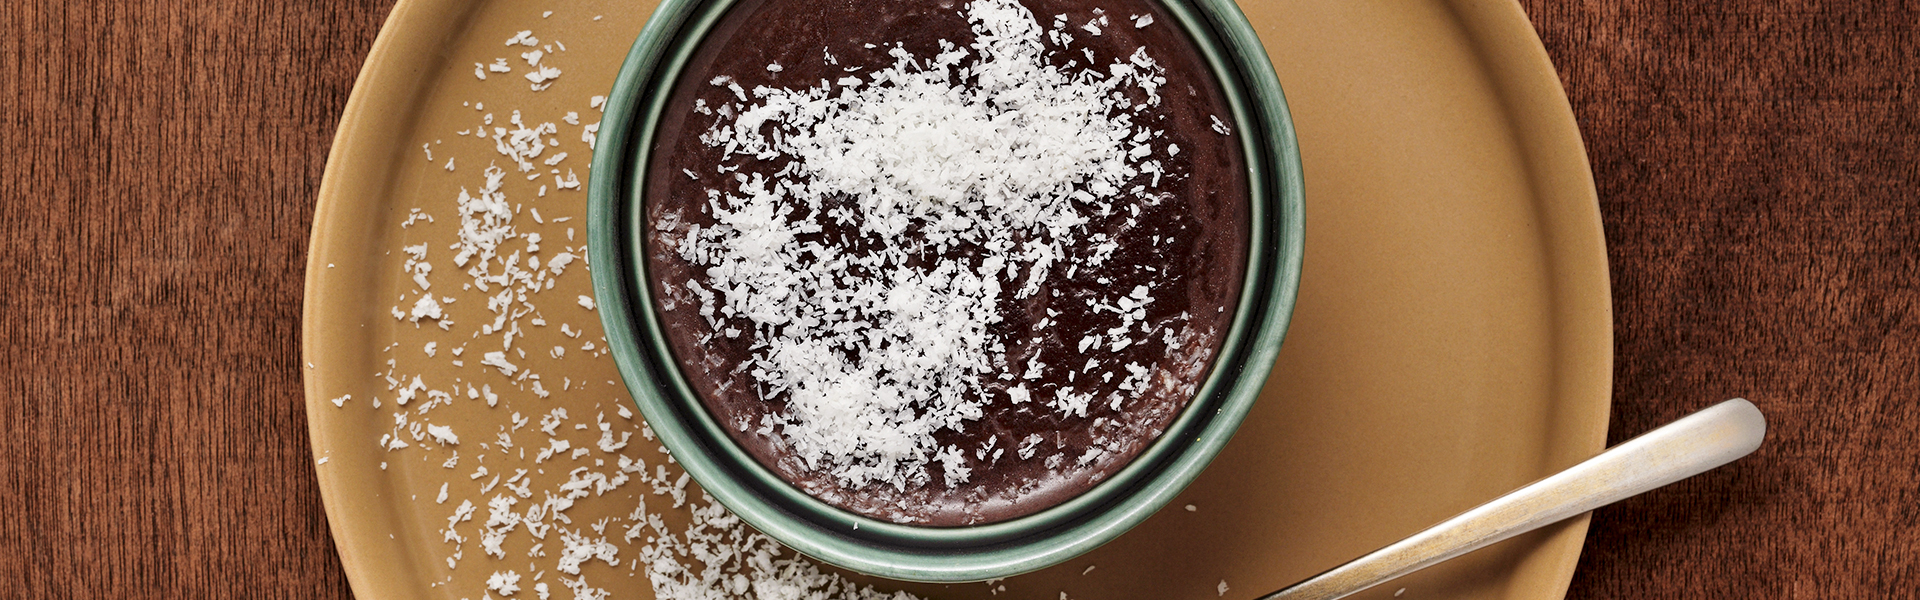 Vegan Rice Pudding with Chocolate